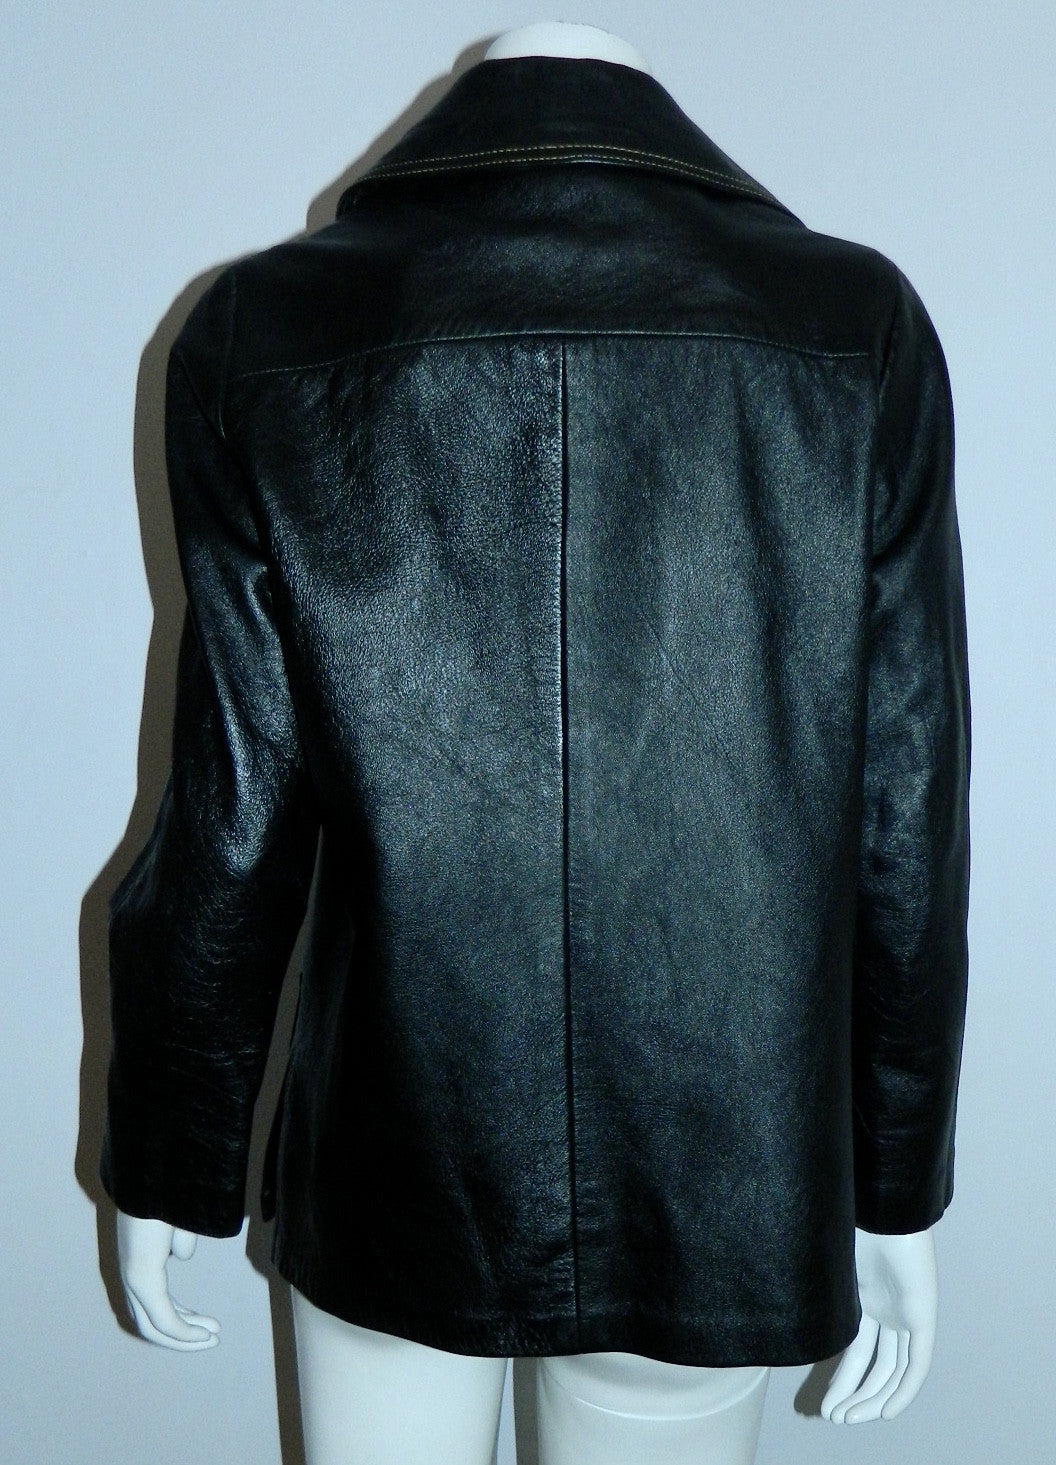 MOD vintage 1960s black leather jacket - contrast stitch S / M